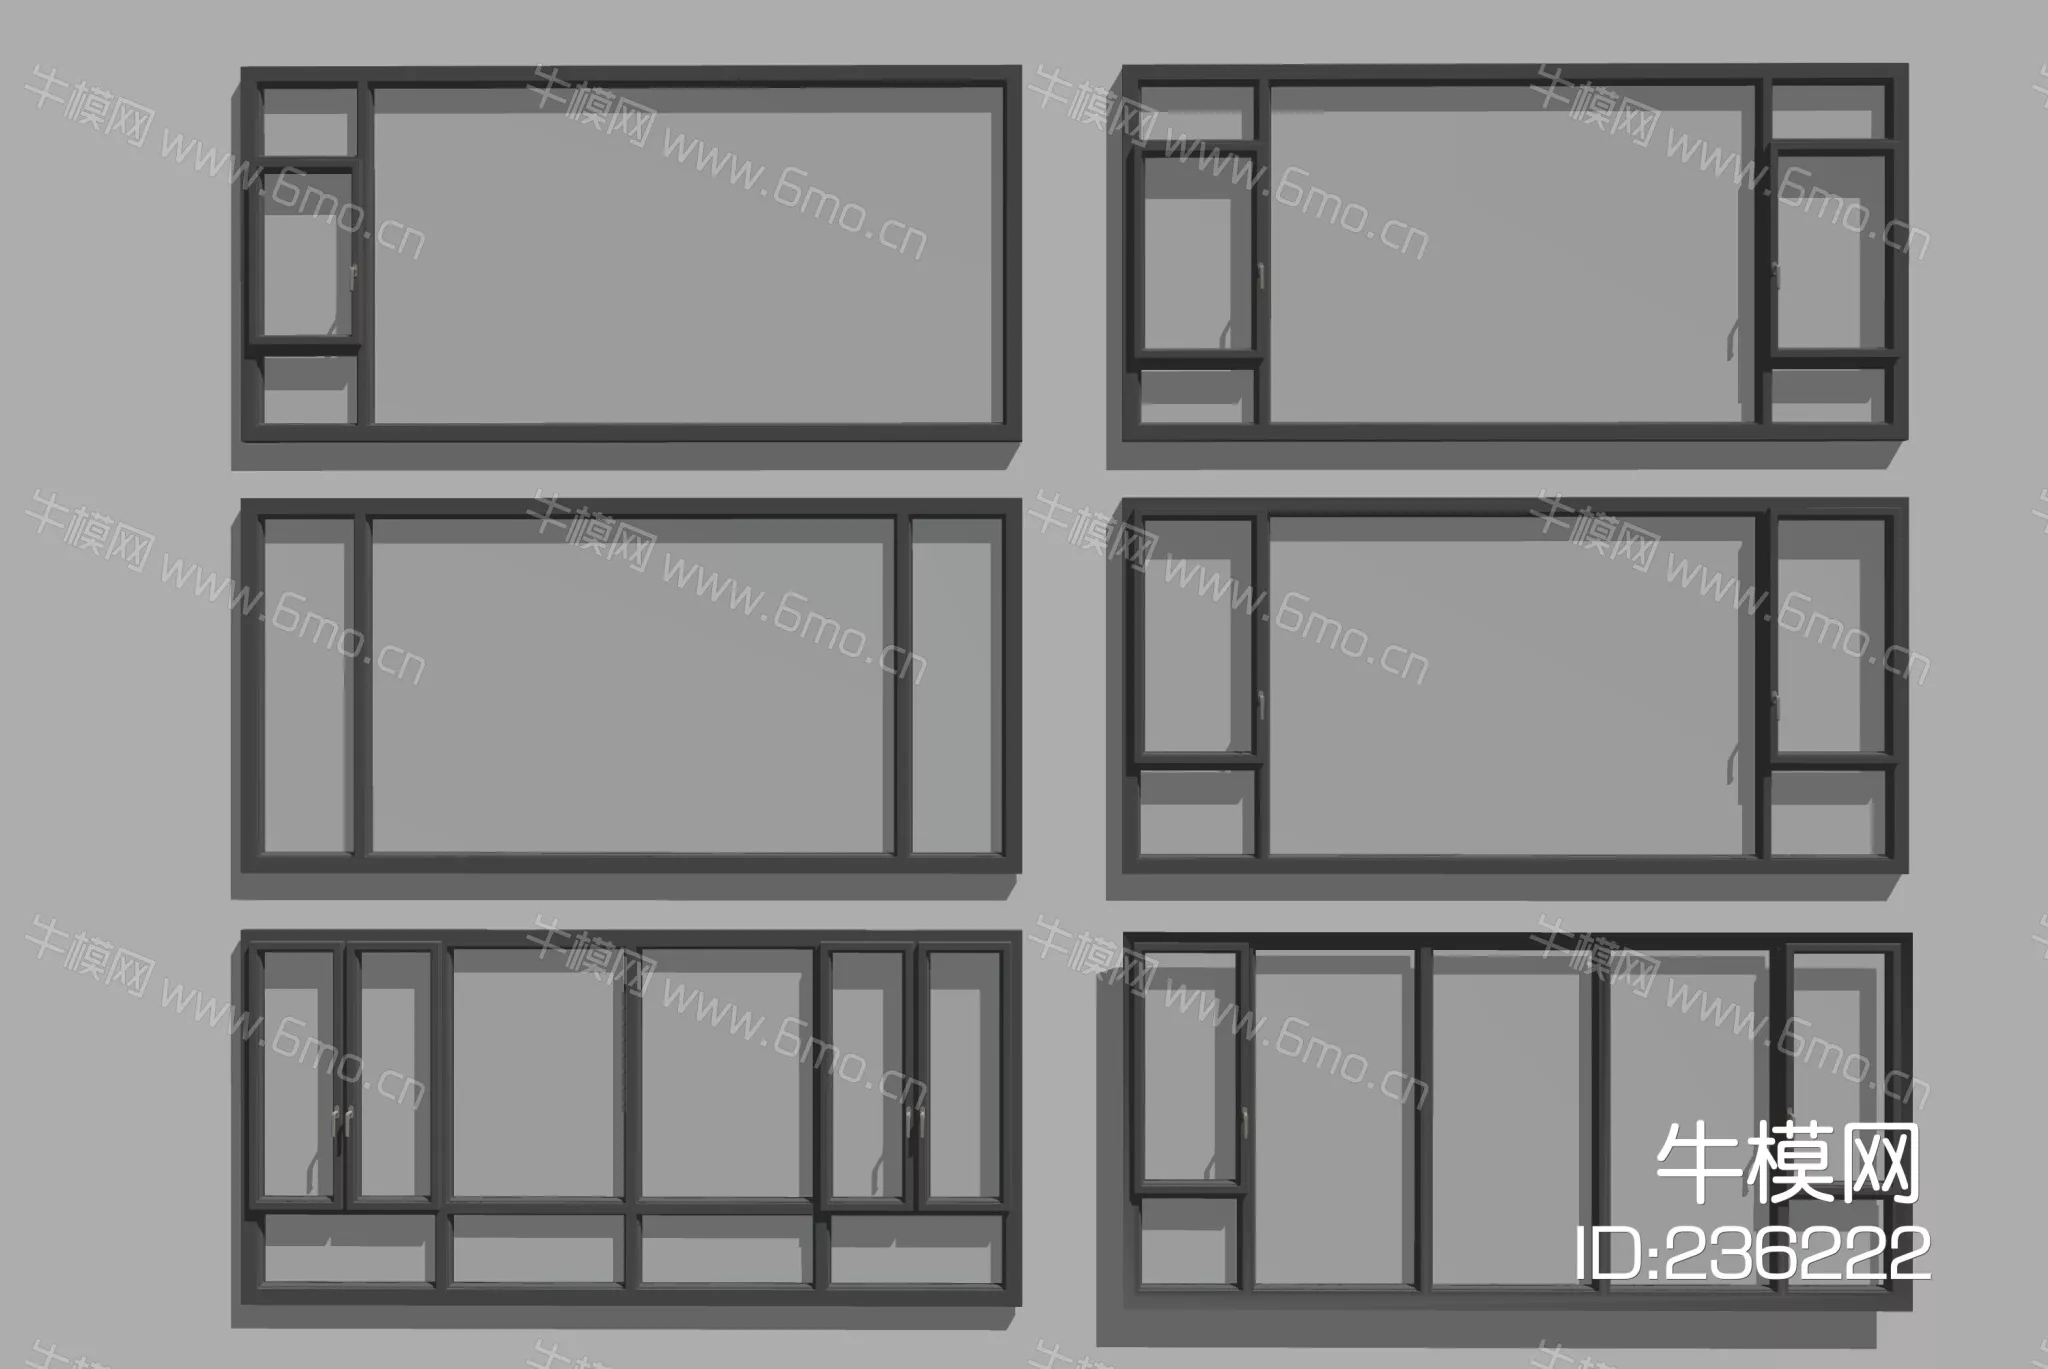 MODERN DOOR AND WINDOWS - SKETCHUP 3D MODEL - ENSCAPE - 236222